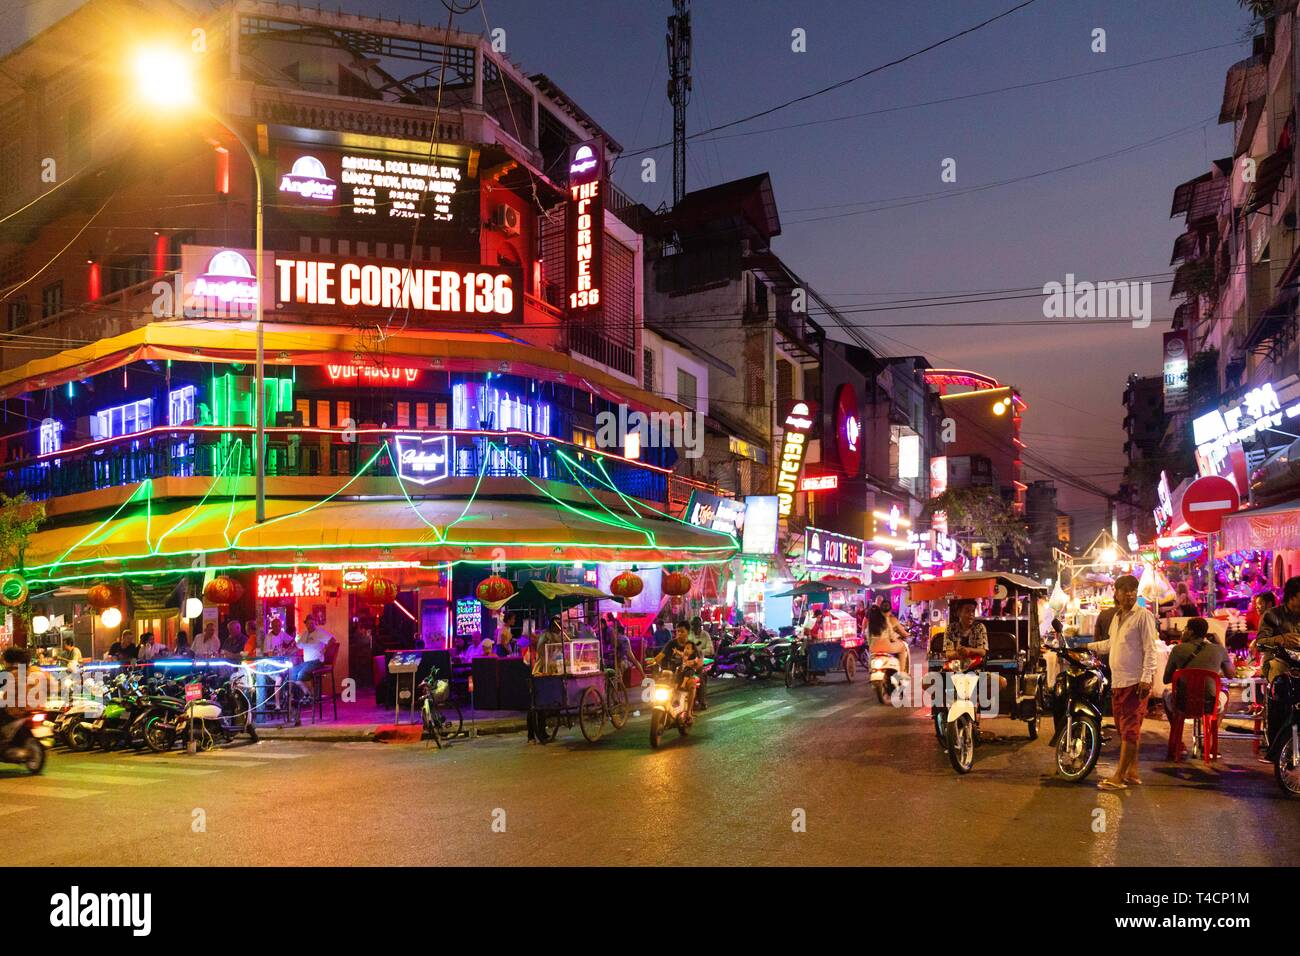 La vida en la calle, la vida nocturna, la esquina 136 Bar, Discoteca, Phnom Penh, Camboya Foto de stock